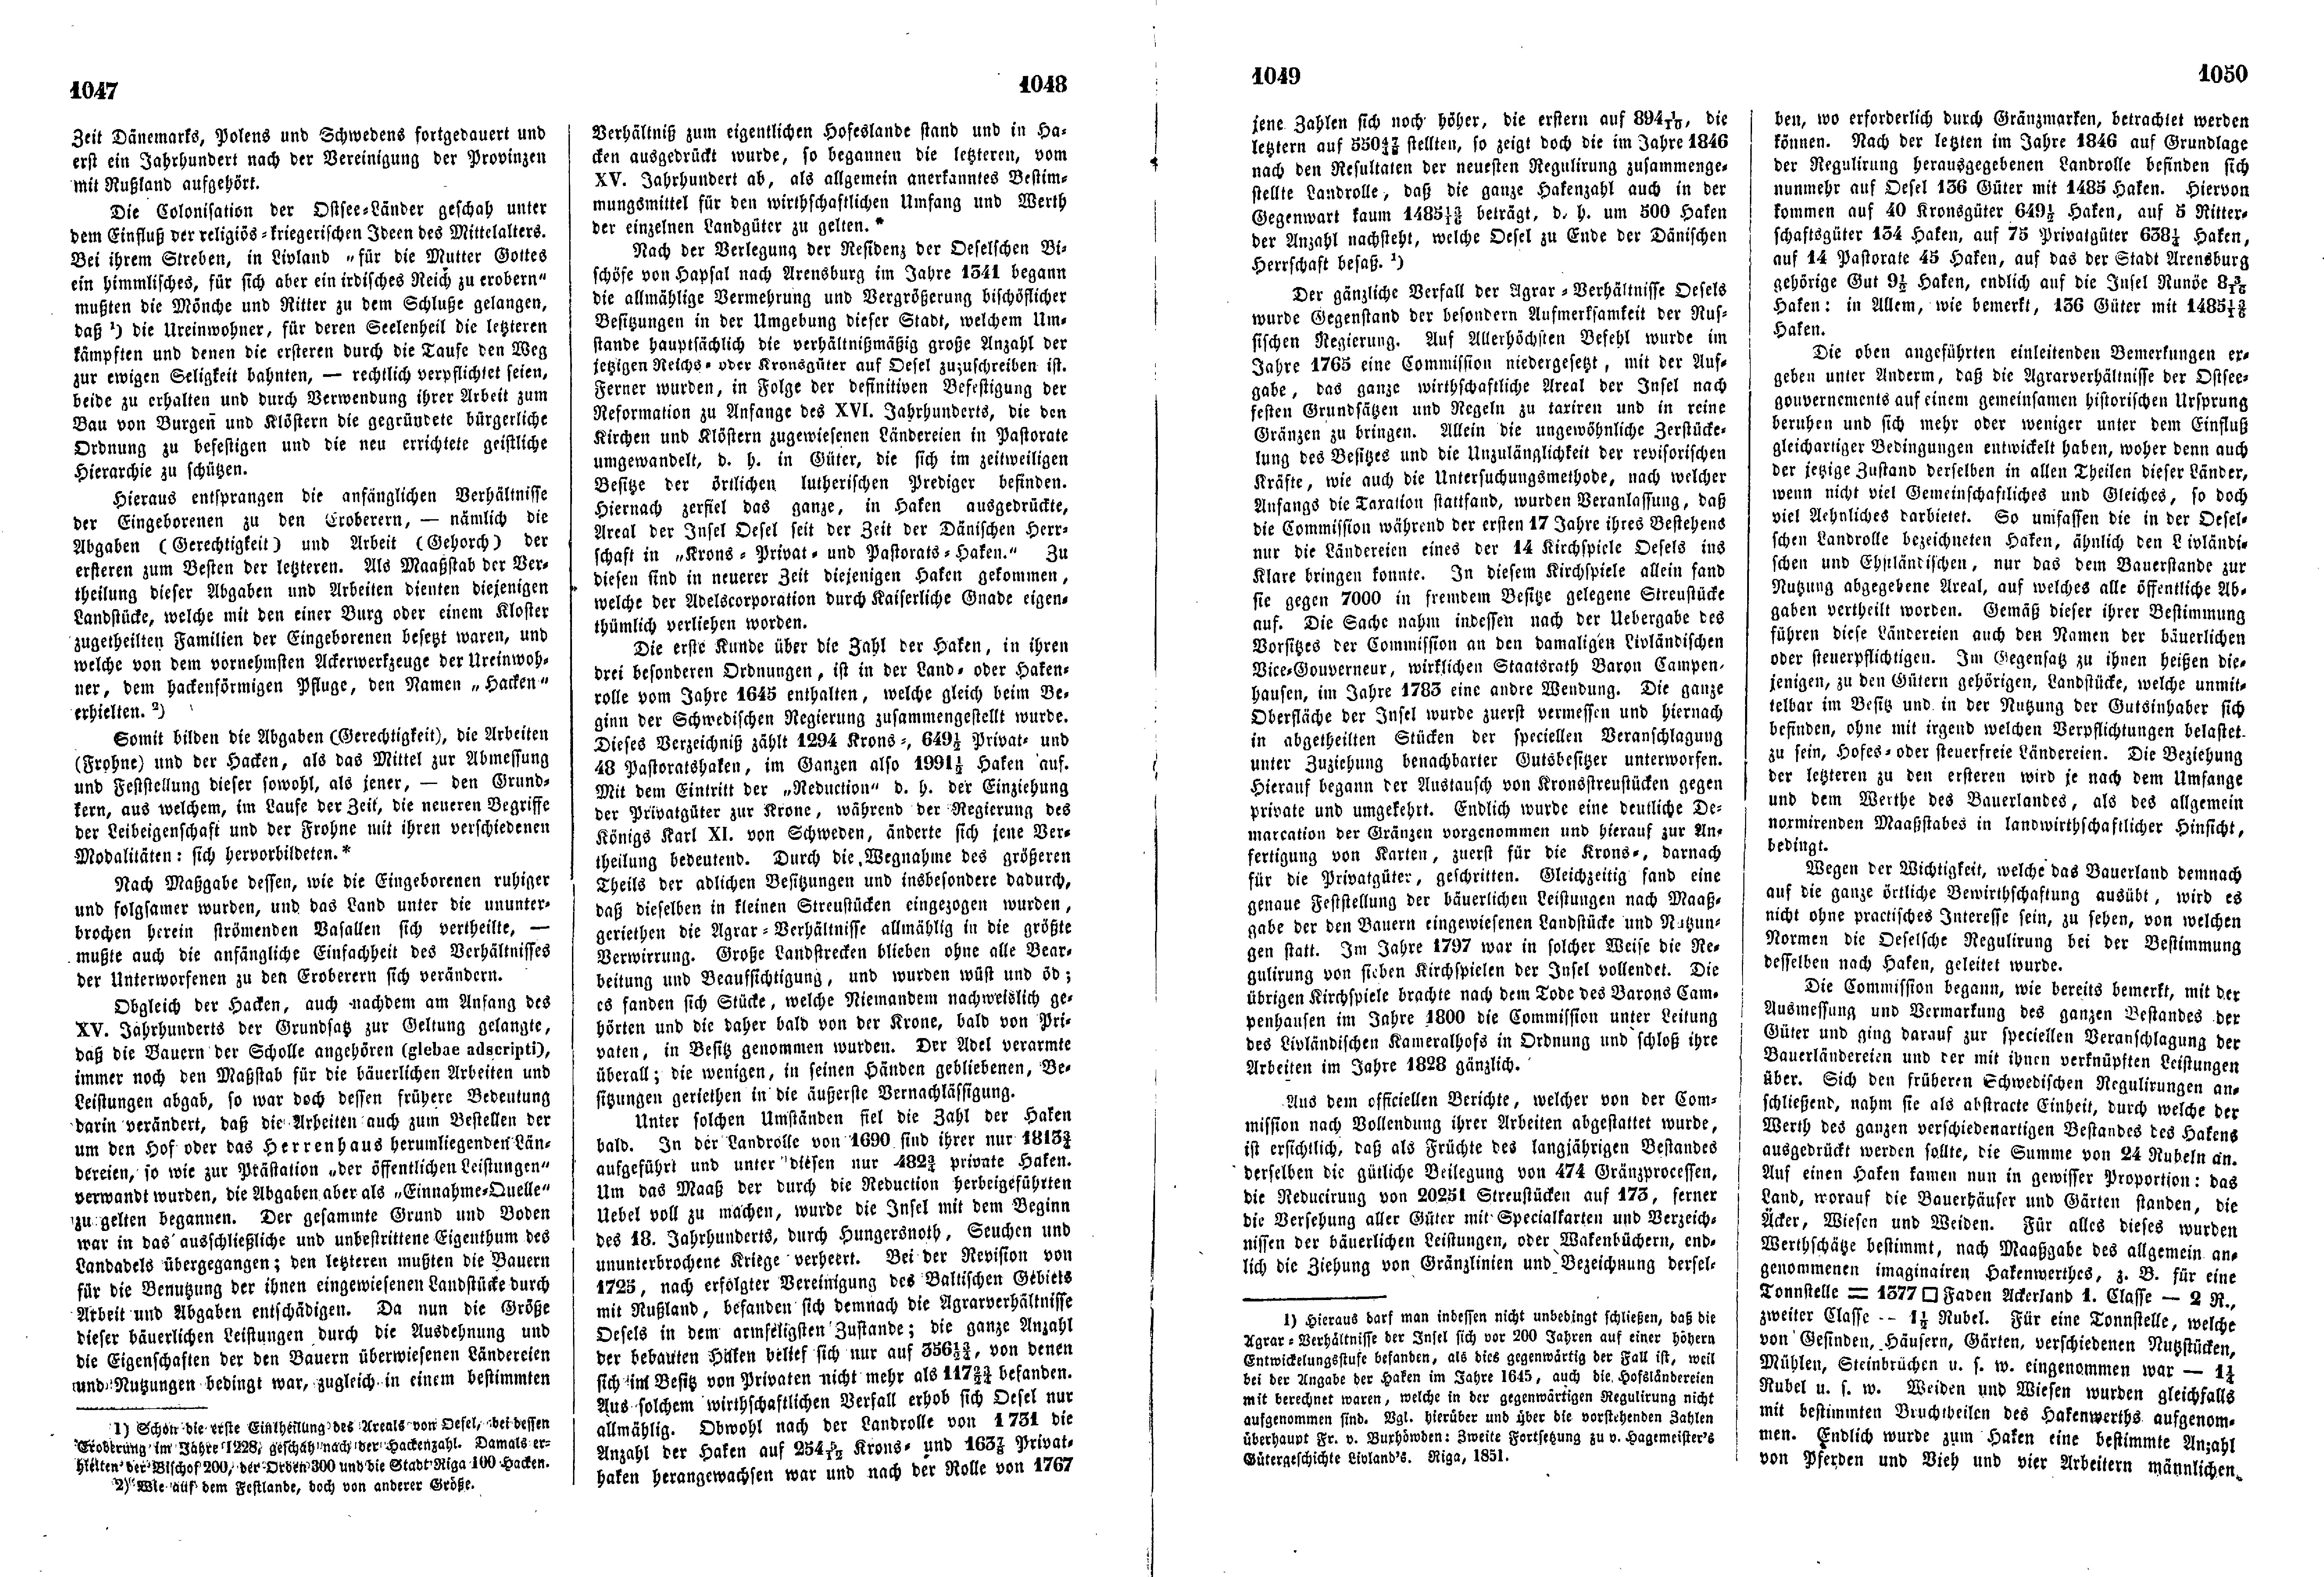 Das Inland [18] (1853) | 272. (1047-1050) Main body of text